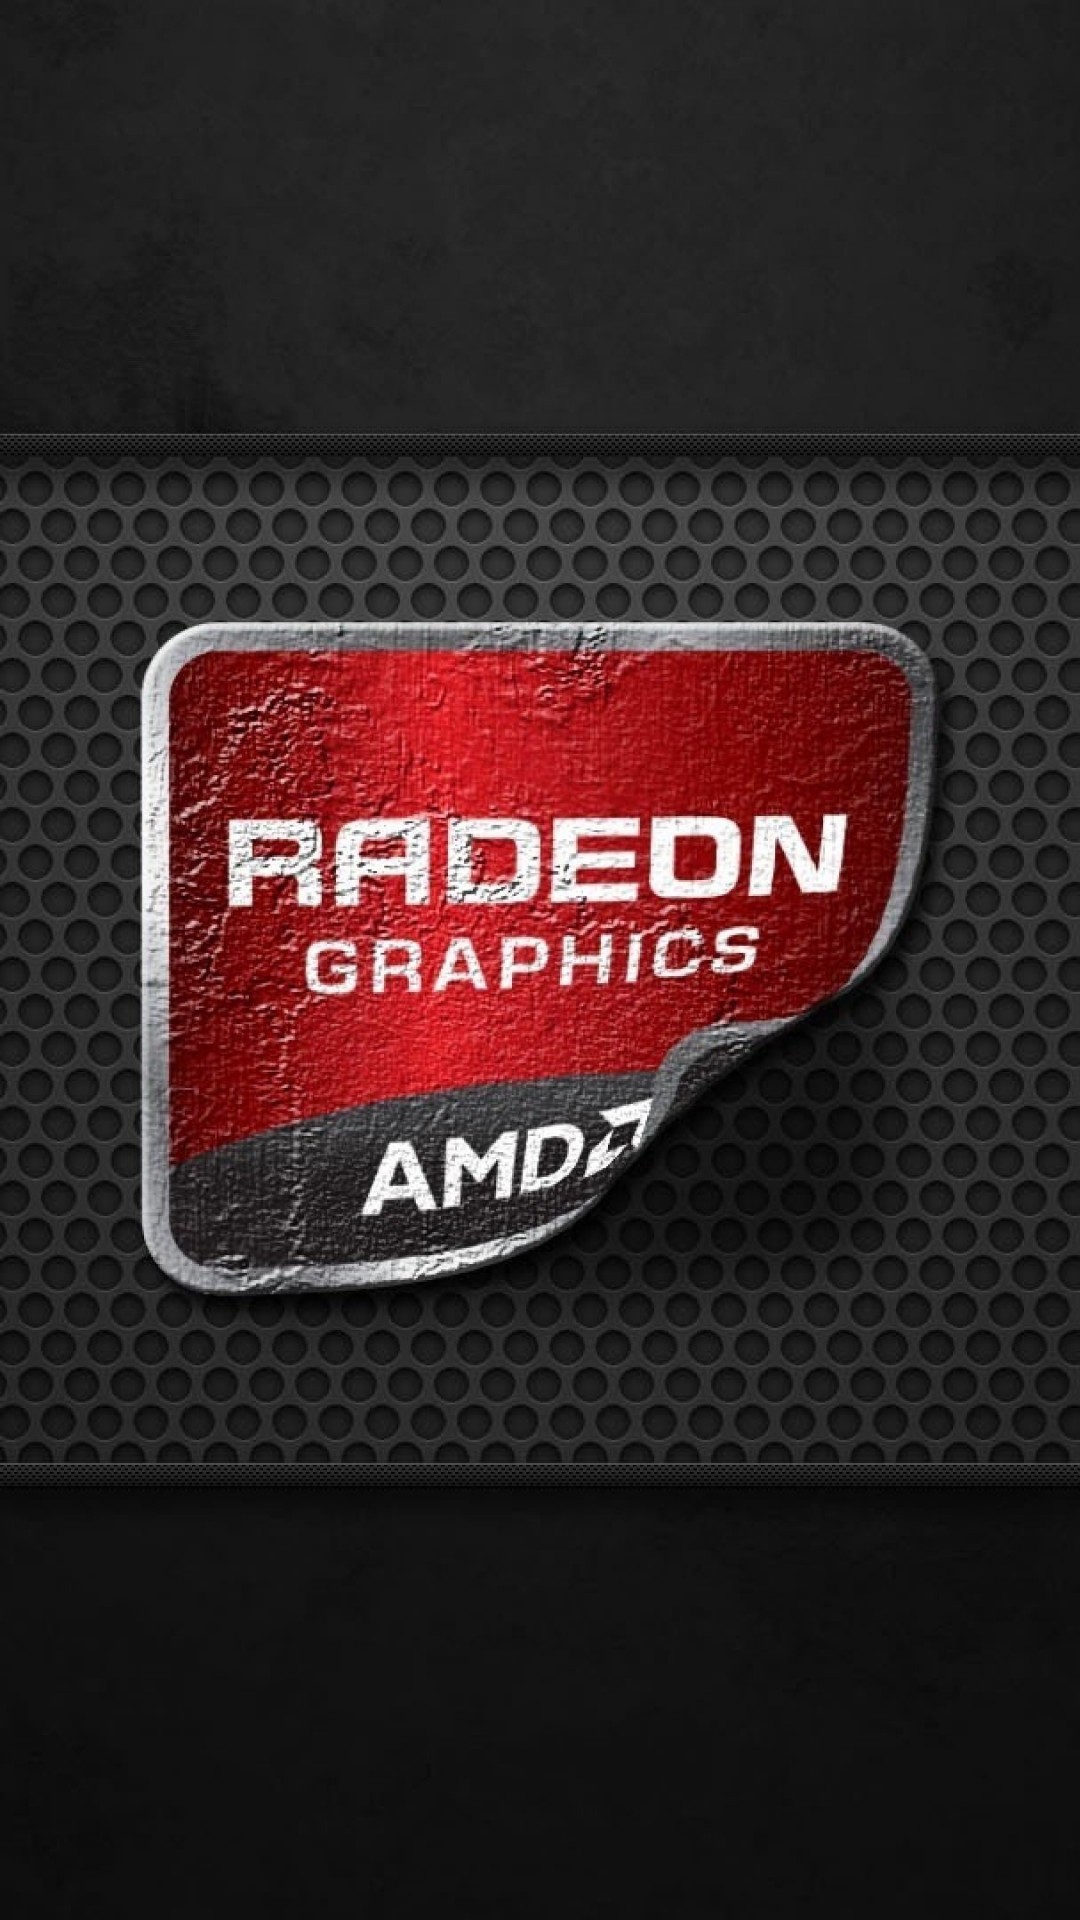 AMD Radeon Graphics Wallpaper for SONY Xperia Z3